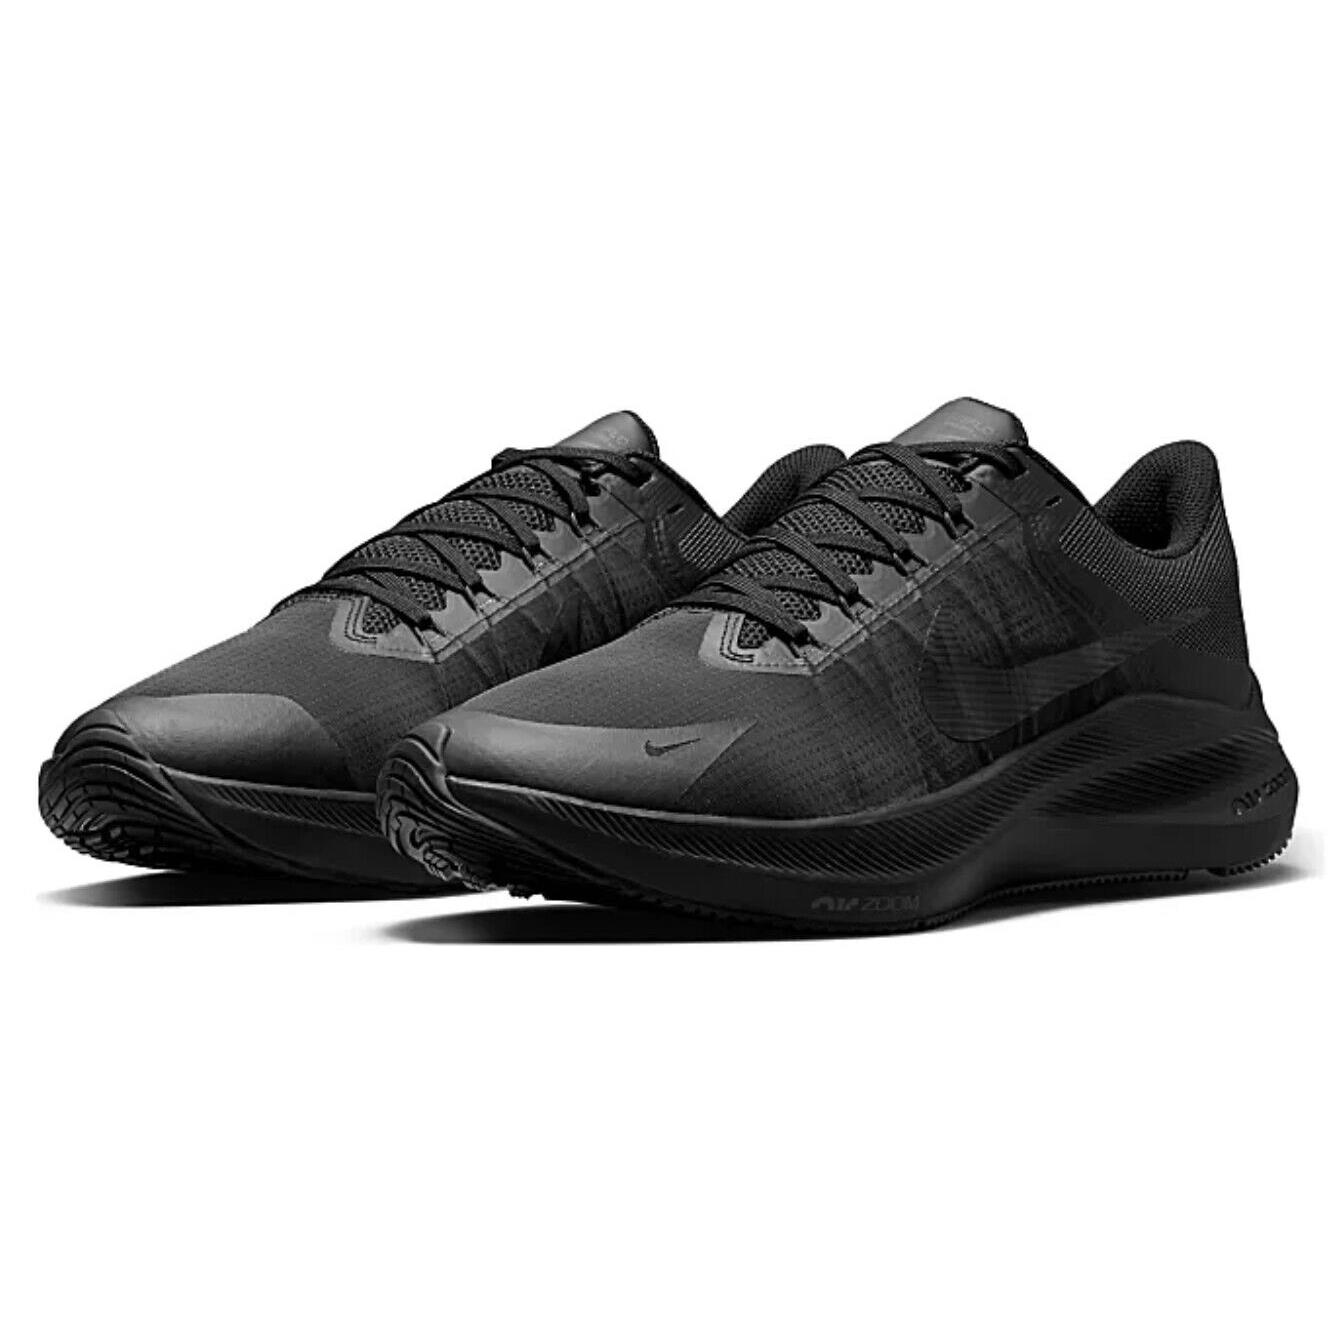 Nike shoes Zoom Winflo - Black 0